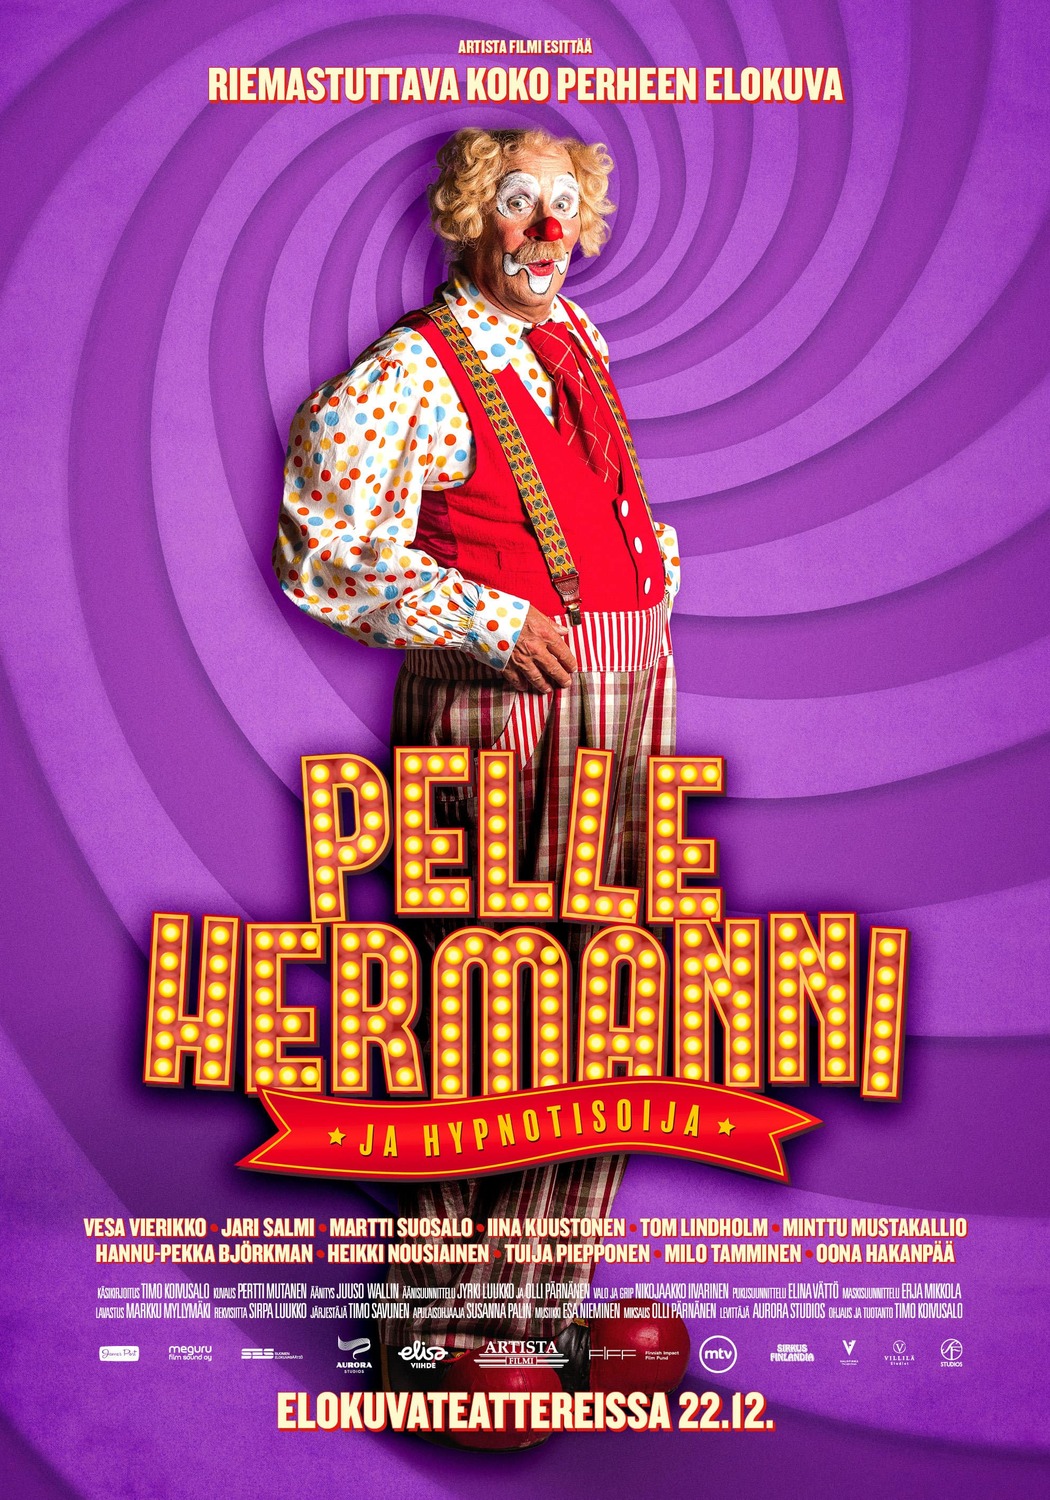 Extra Large Movie Poster Image for Pelle Hermanni ja Hypnotisoija (#1 of 2)